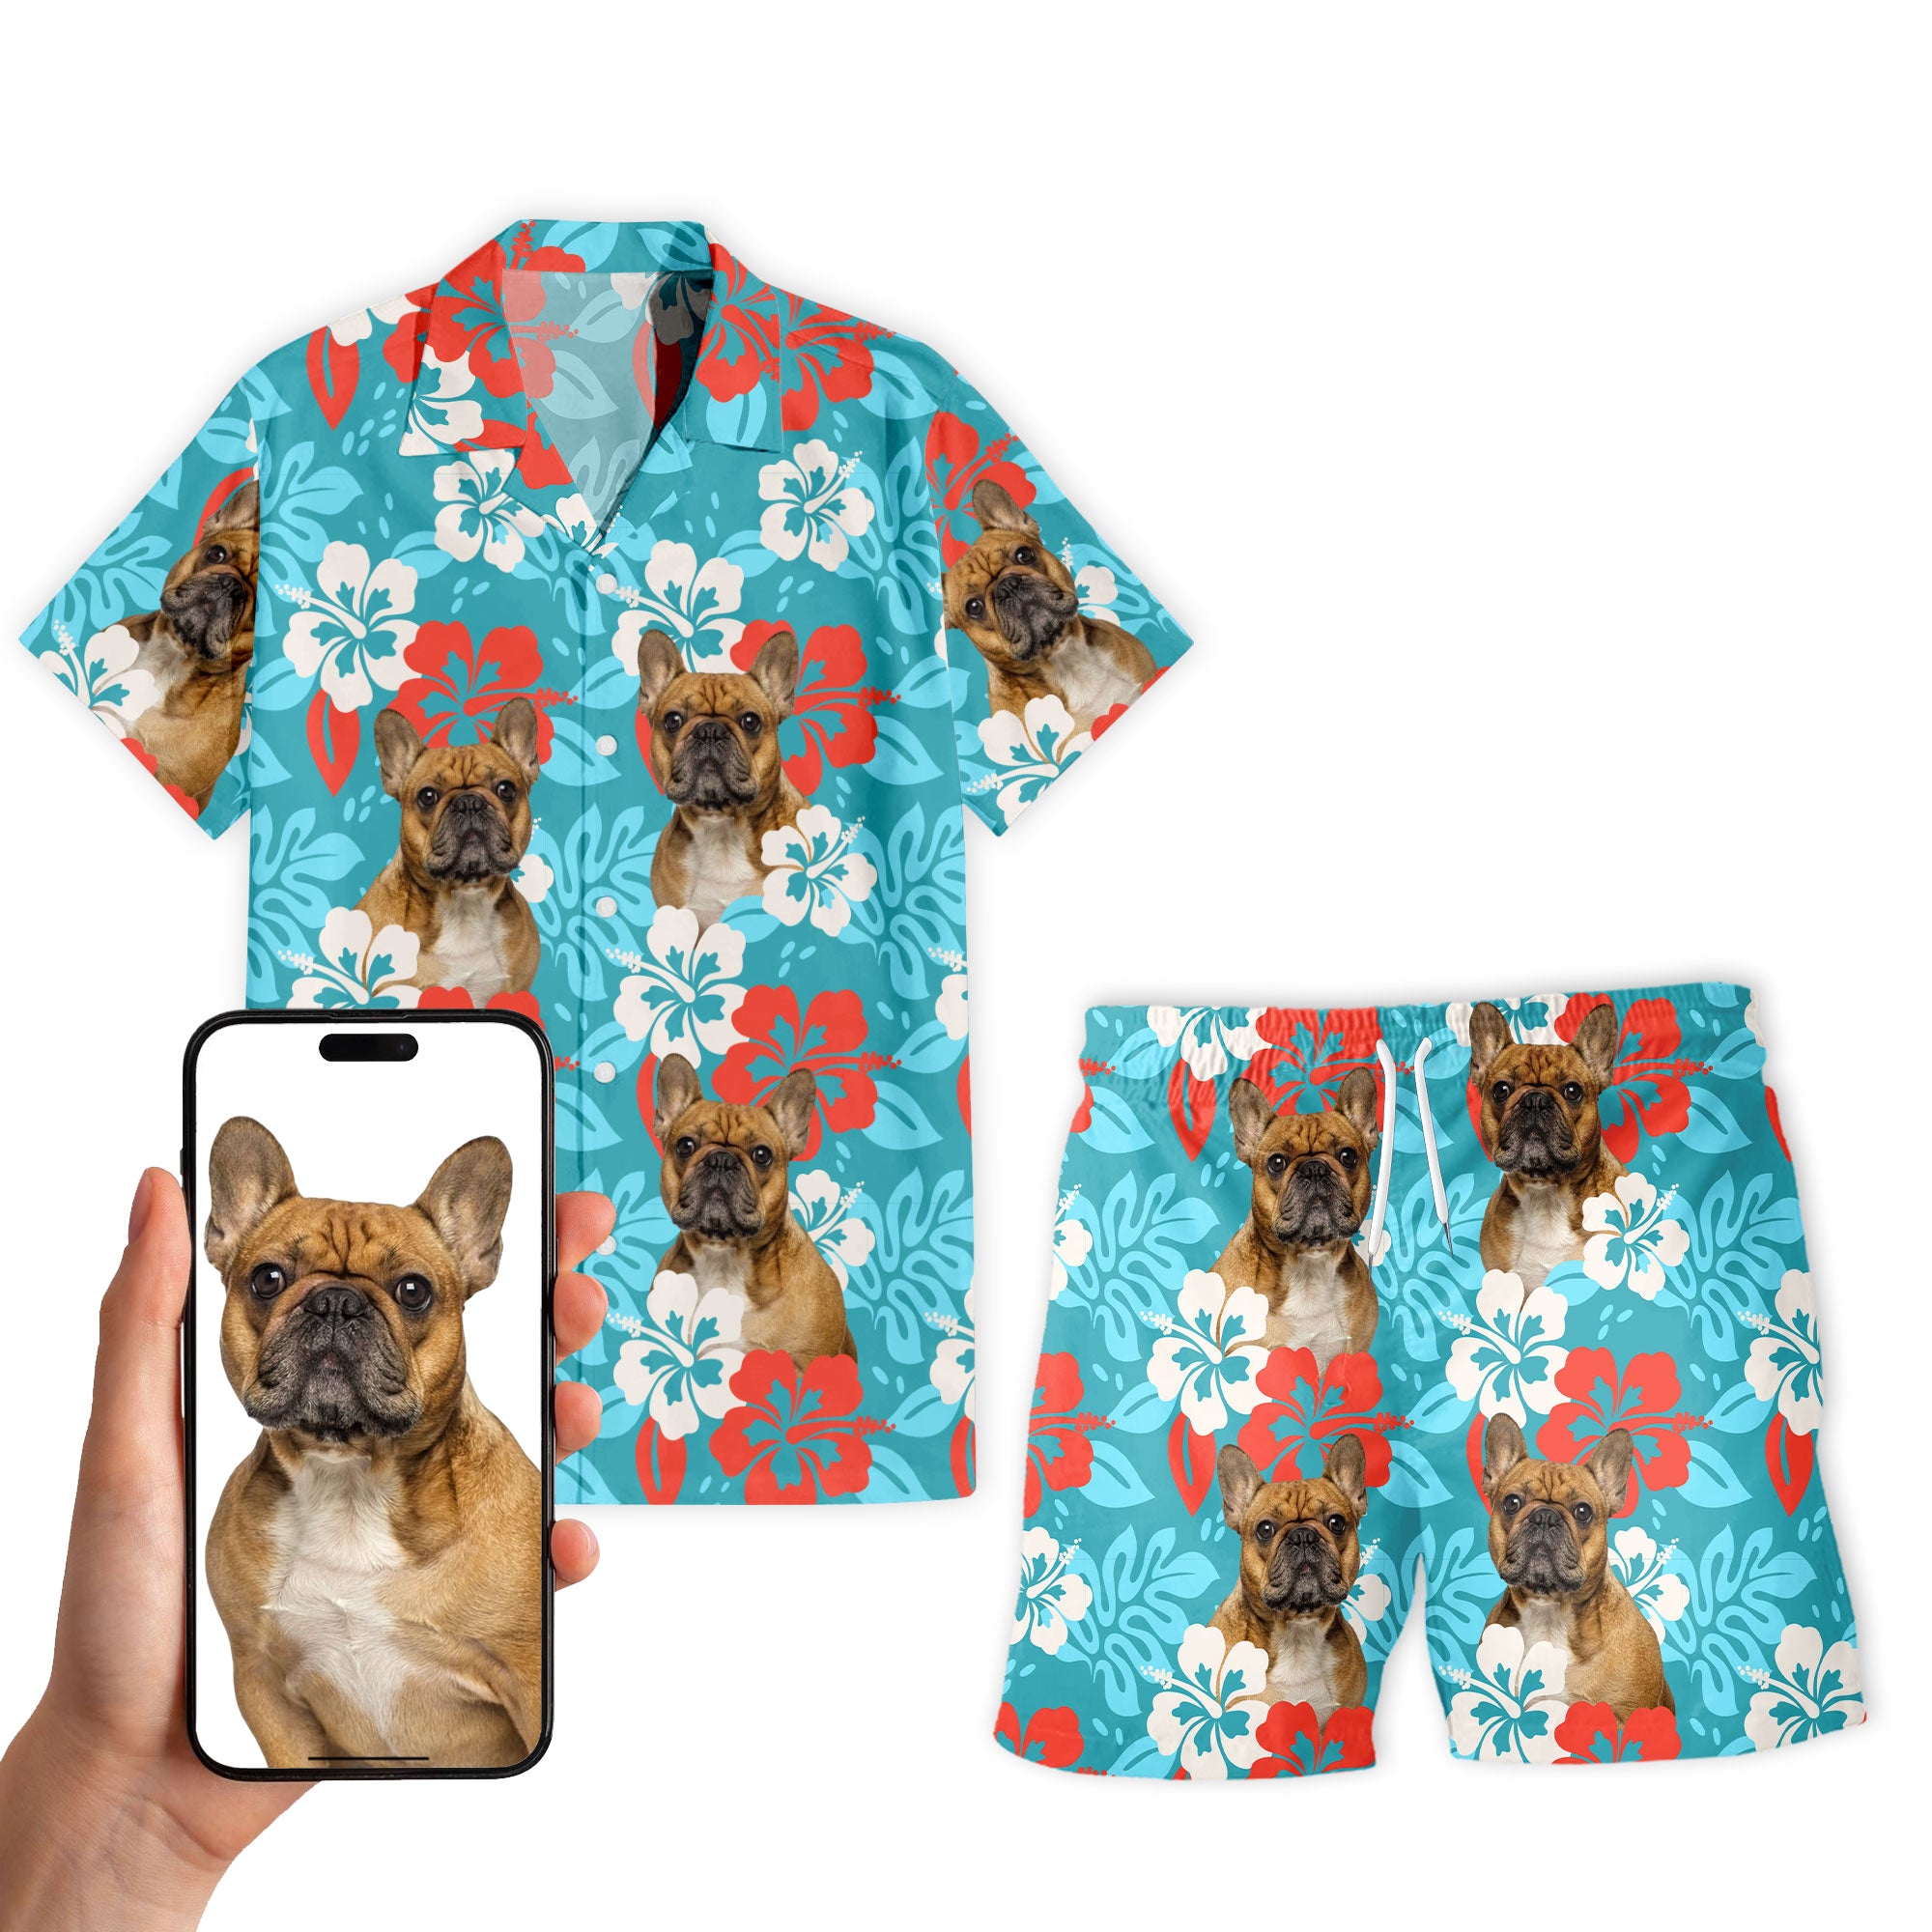 Hawaiian Shirt & Shorts Personalized - 02